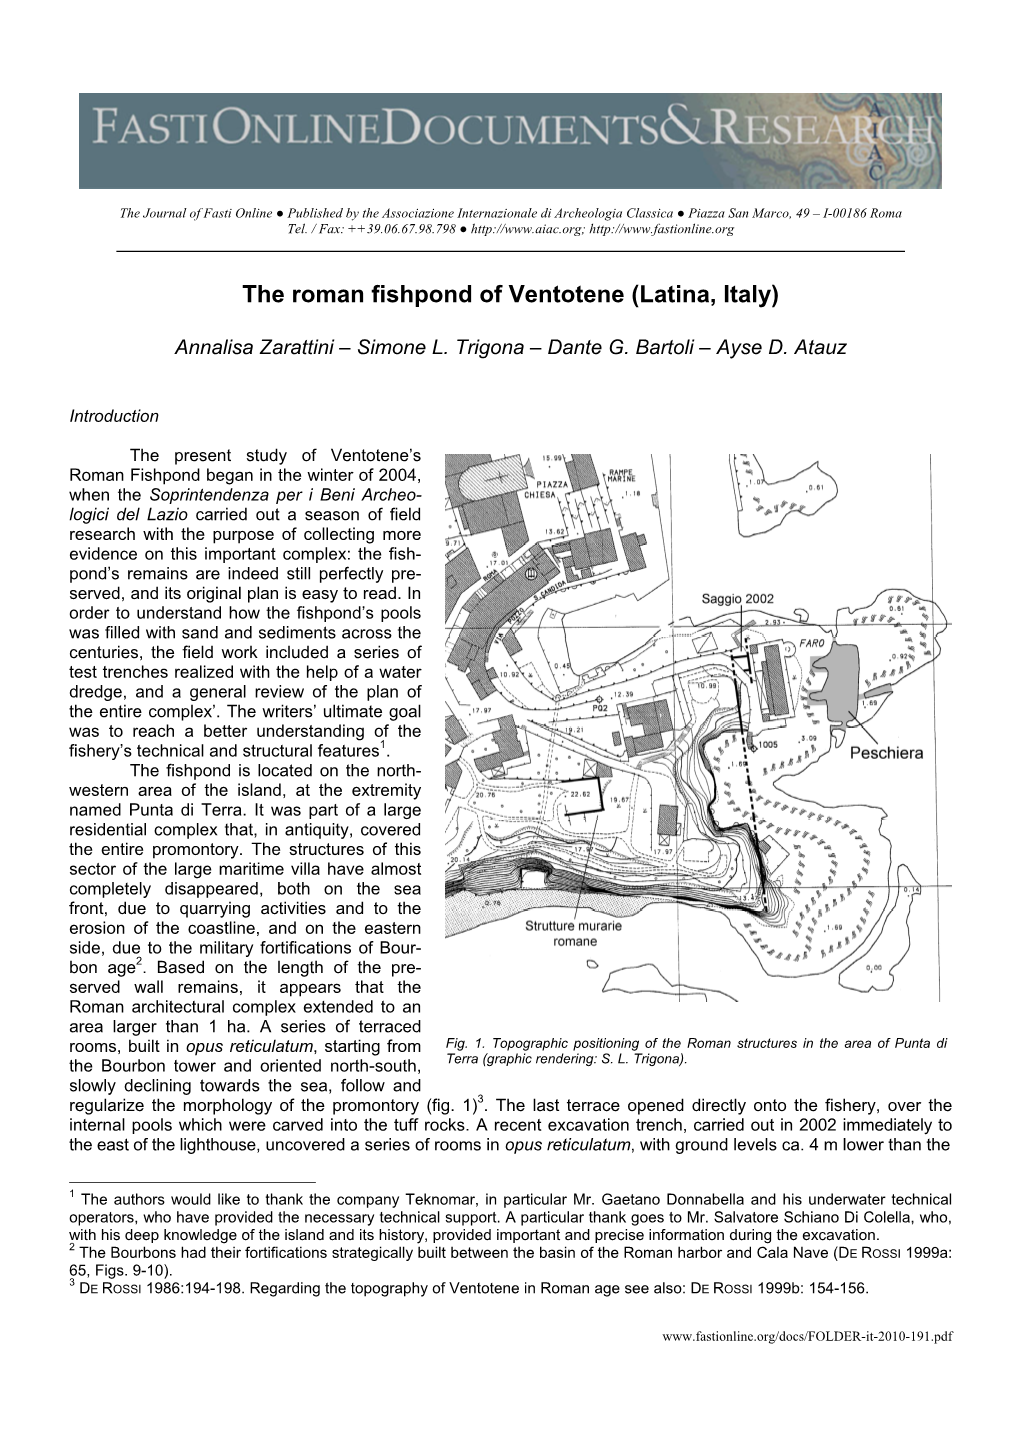 The Roman Fishpond of Ventotene (Latina, Italy)